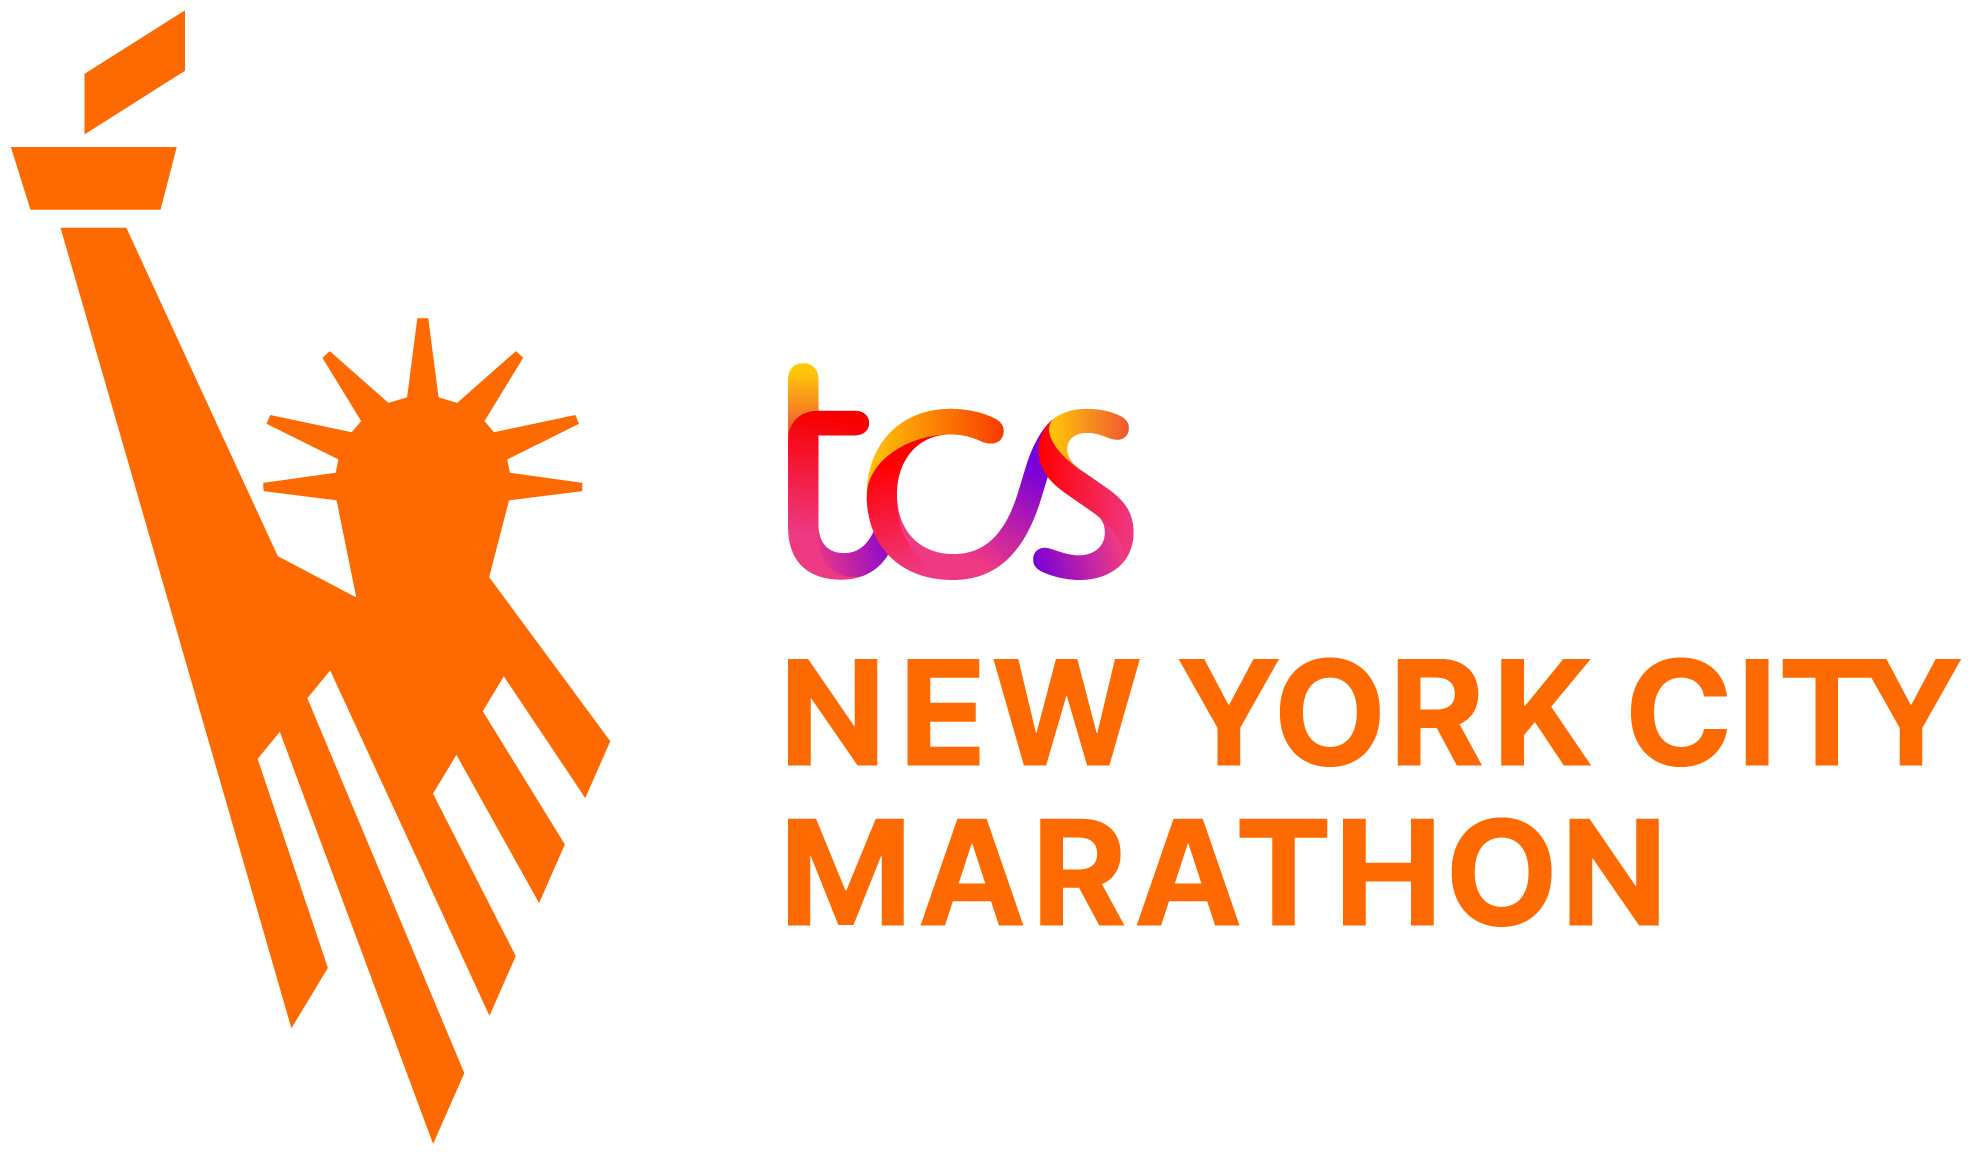 2023 TCS New York City Marathon